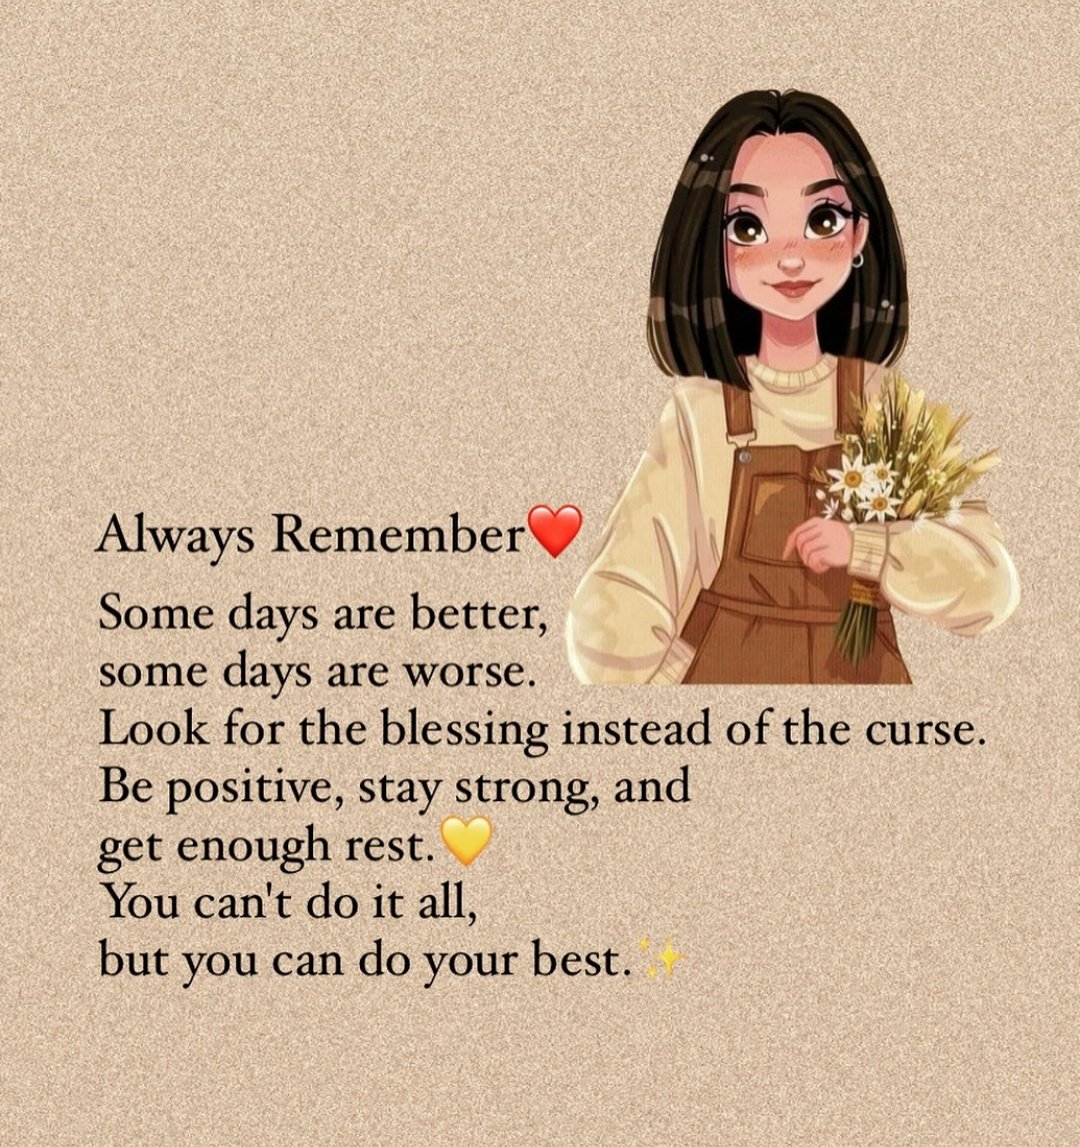 Do Your Best ❤️

#Vibes
#AlhamdulillahForEverything